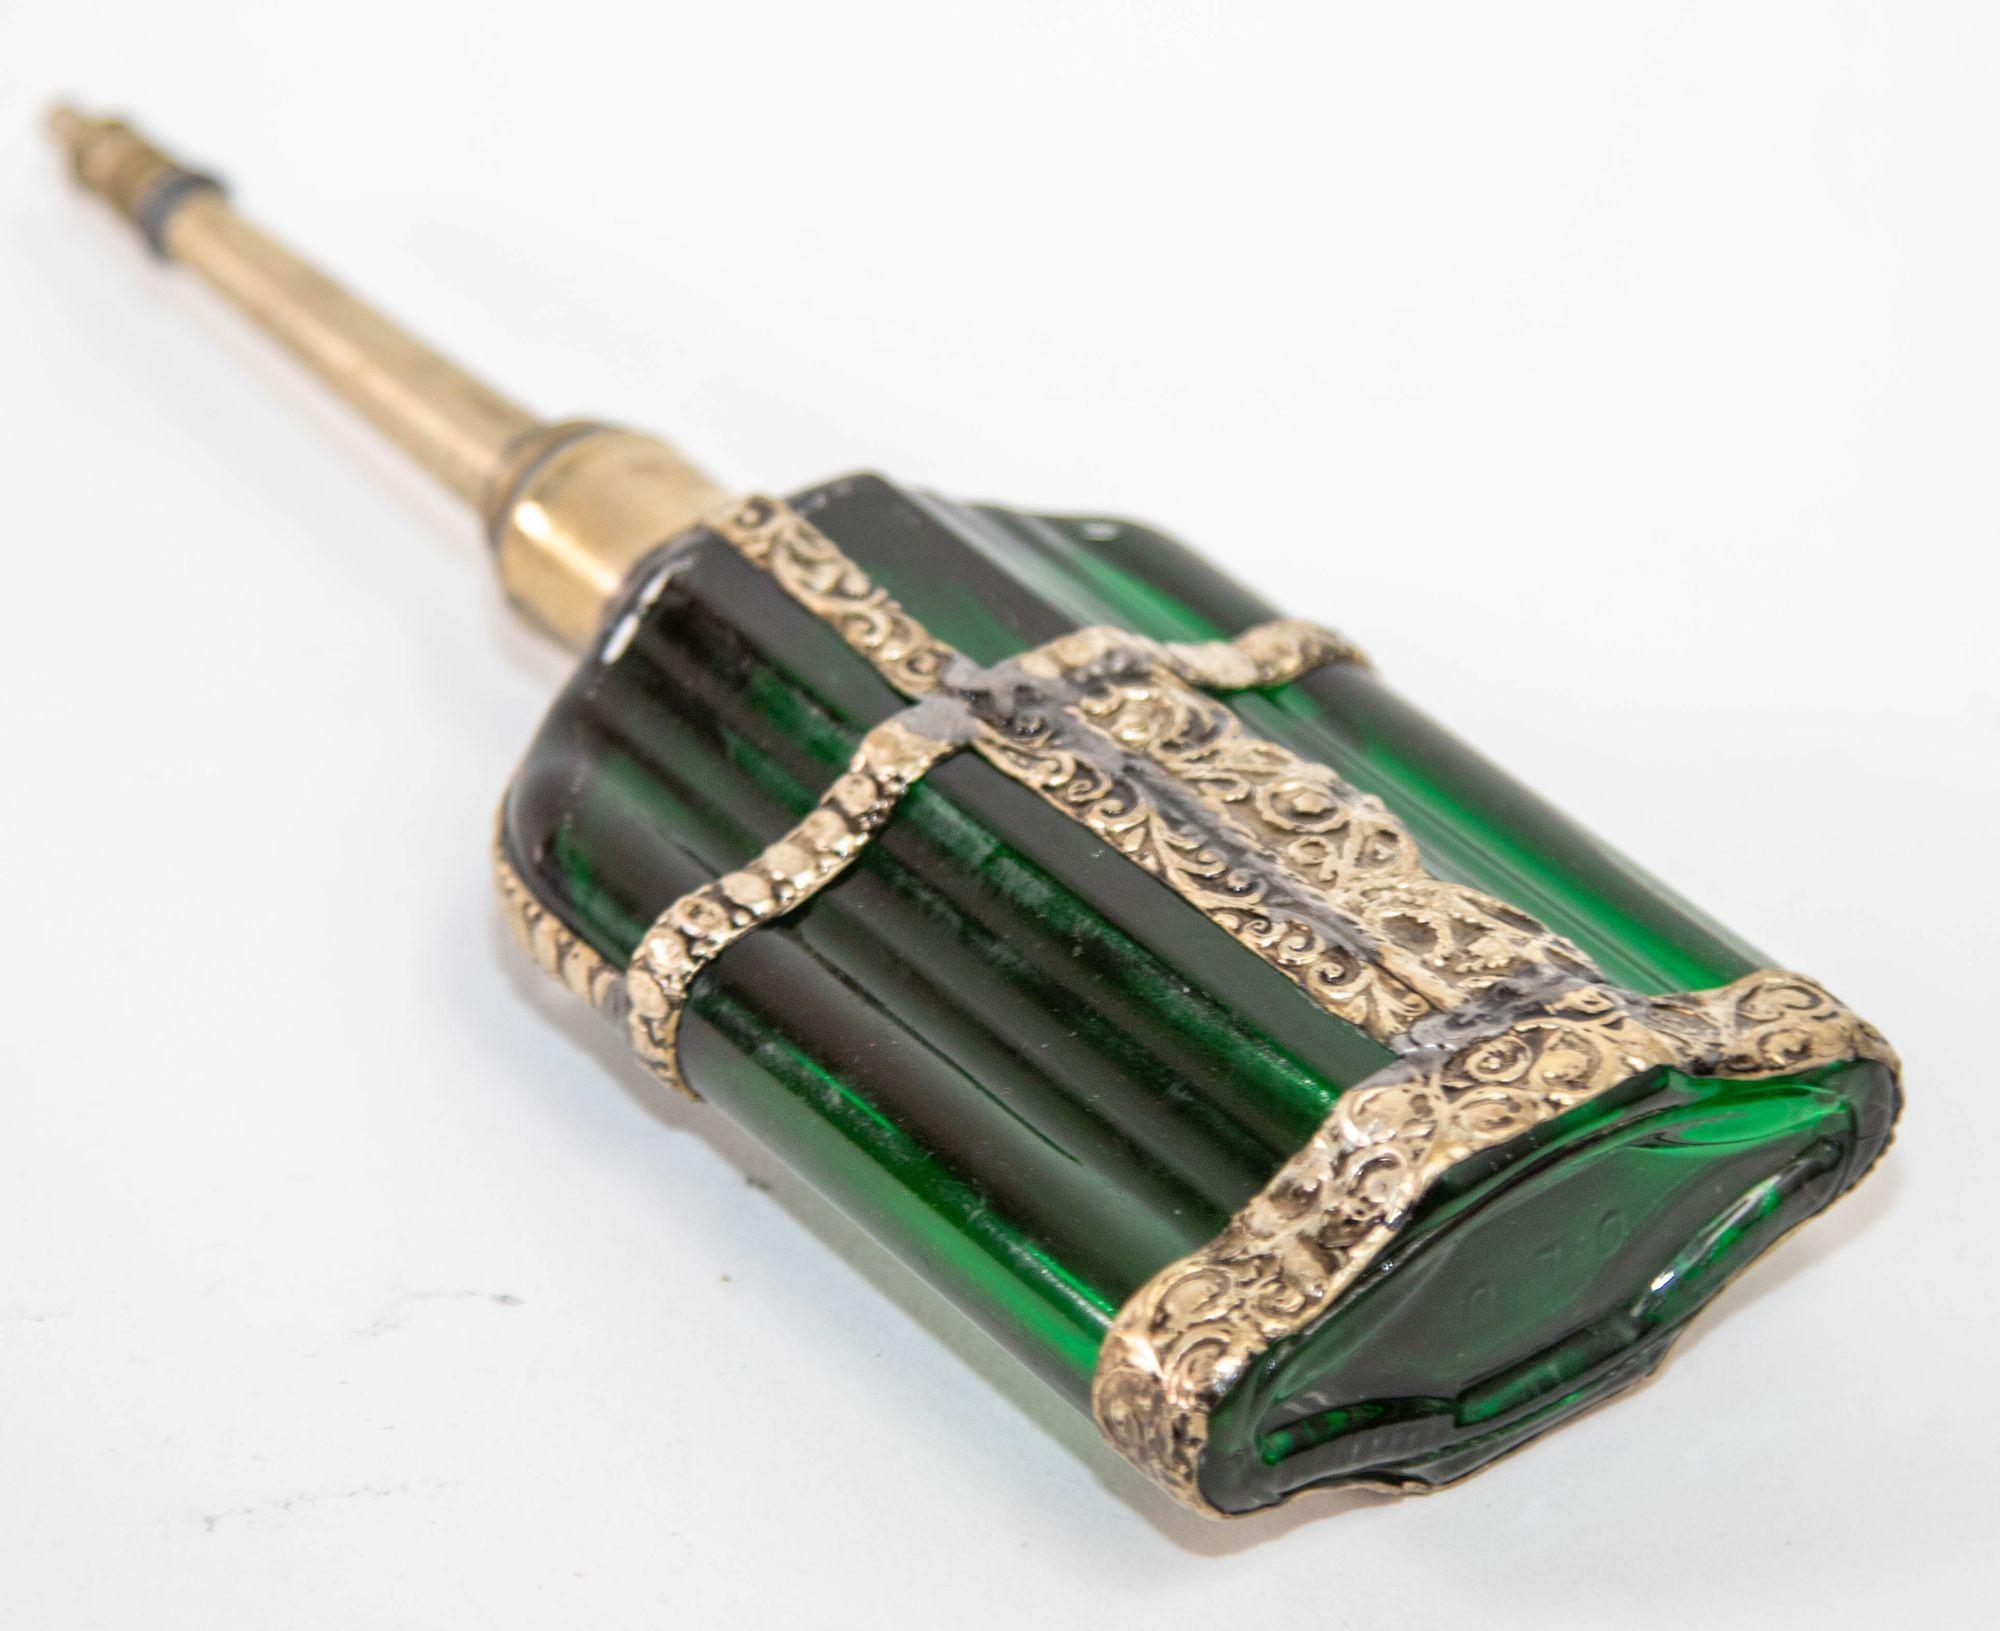 Flacon de flacon de parfum mauresque en verre vert émeraude avec superposition de métal embossé en vente 5